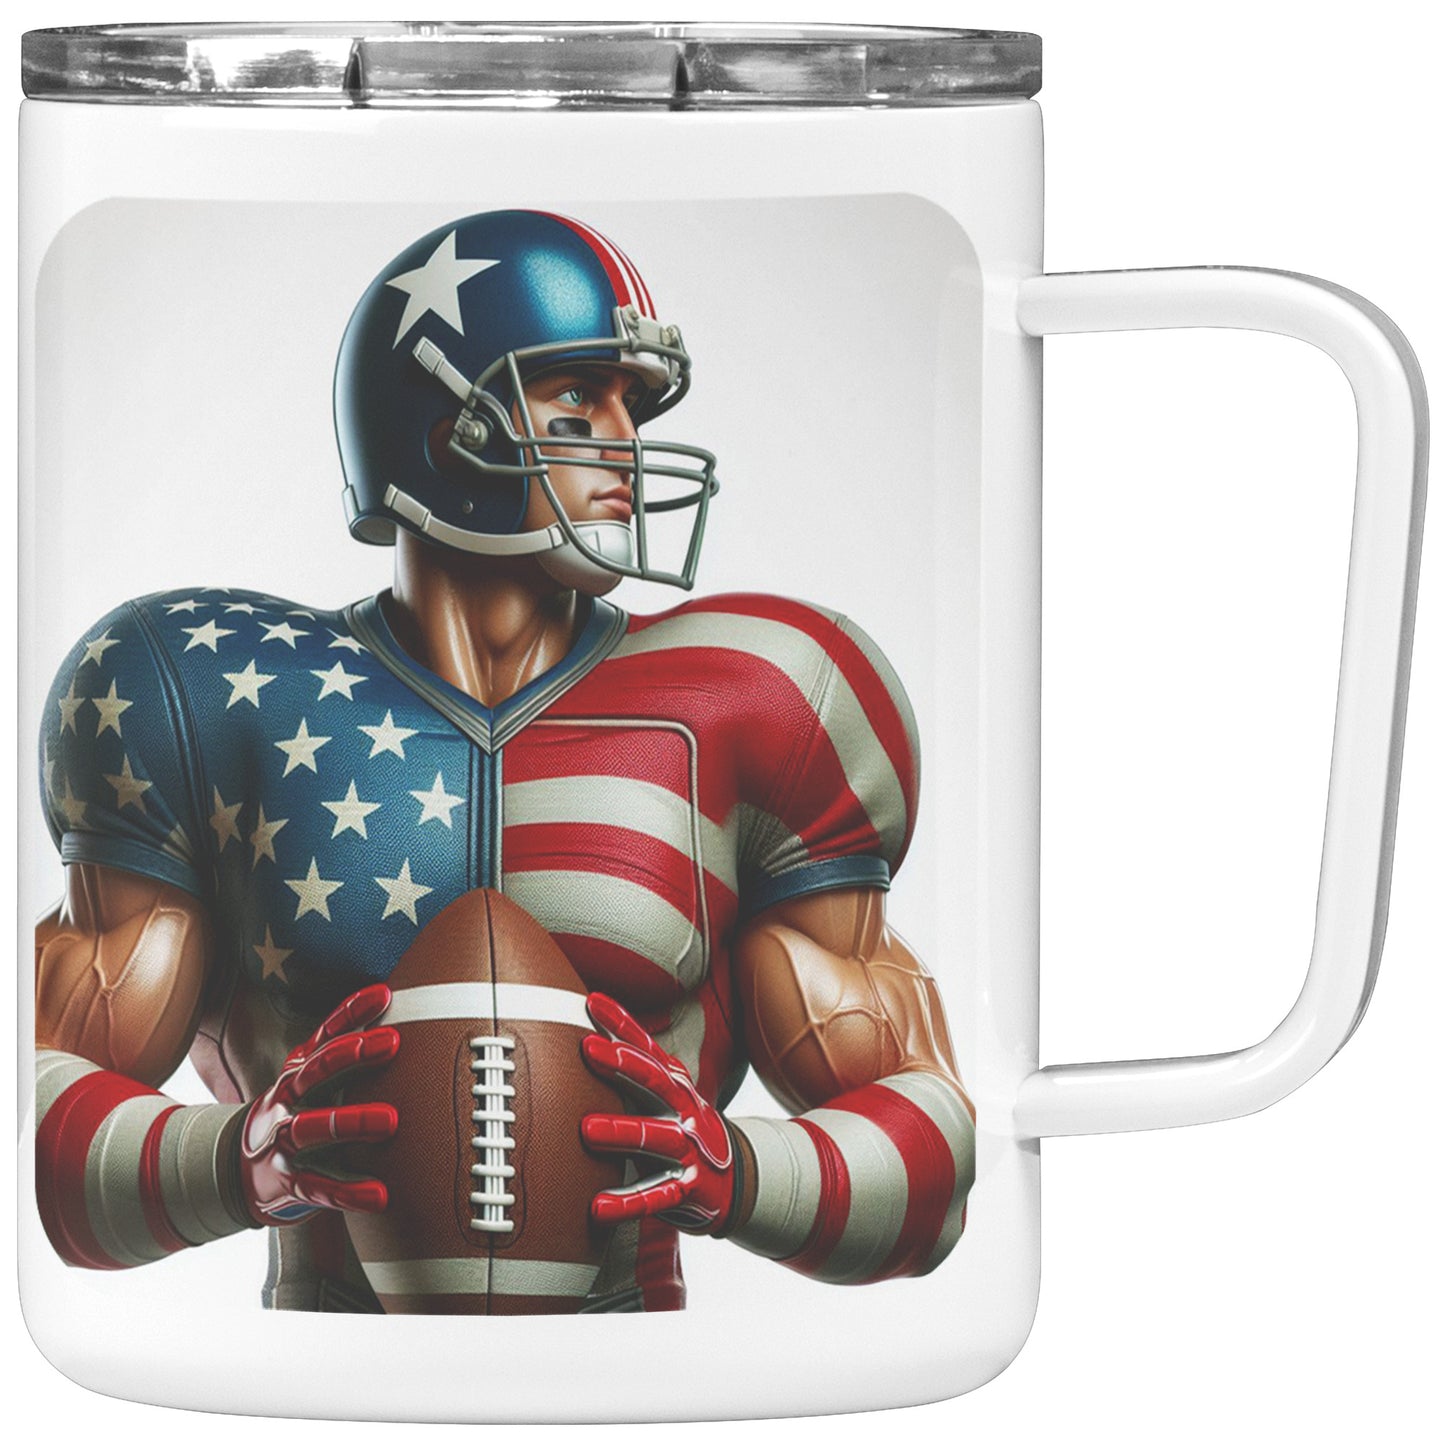 Man Football Player - Insulated Coffee Mug #37